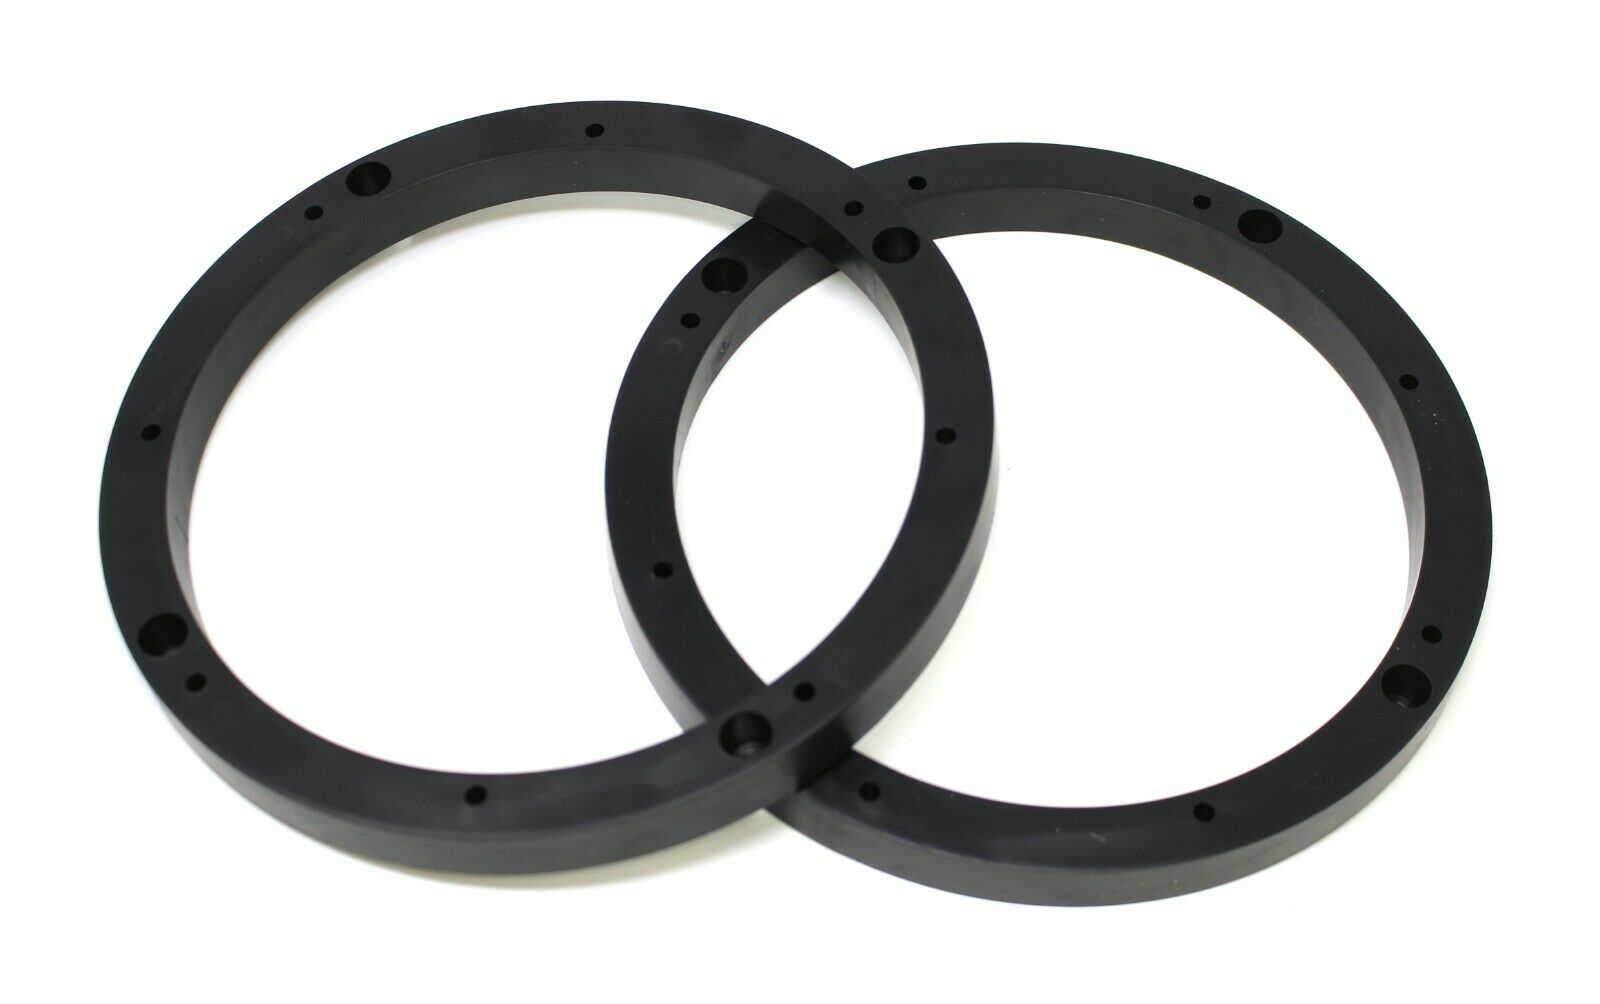 Universal Black Plastic 1/2" Depth Ring Adapter Spacer 6.5" For Car Speaker Pair